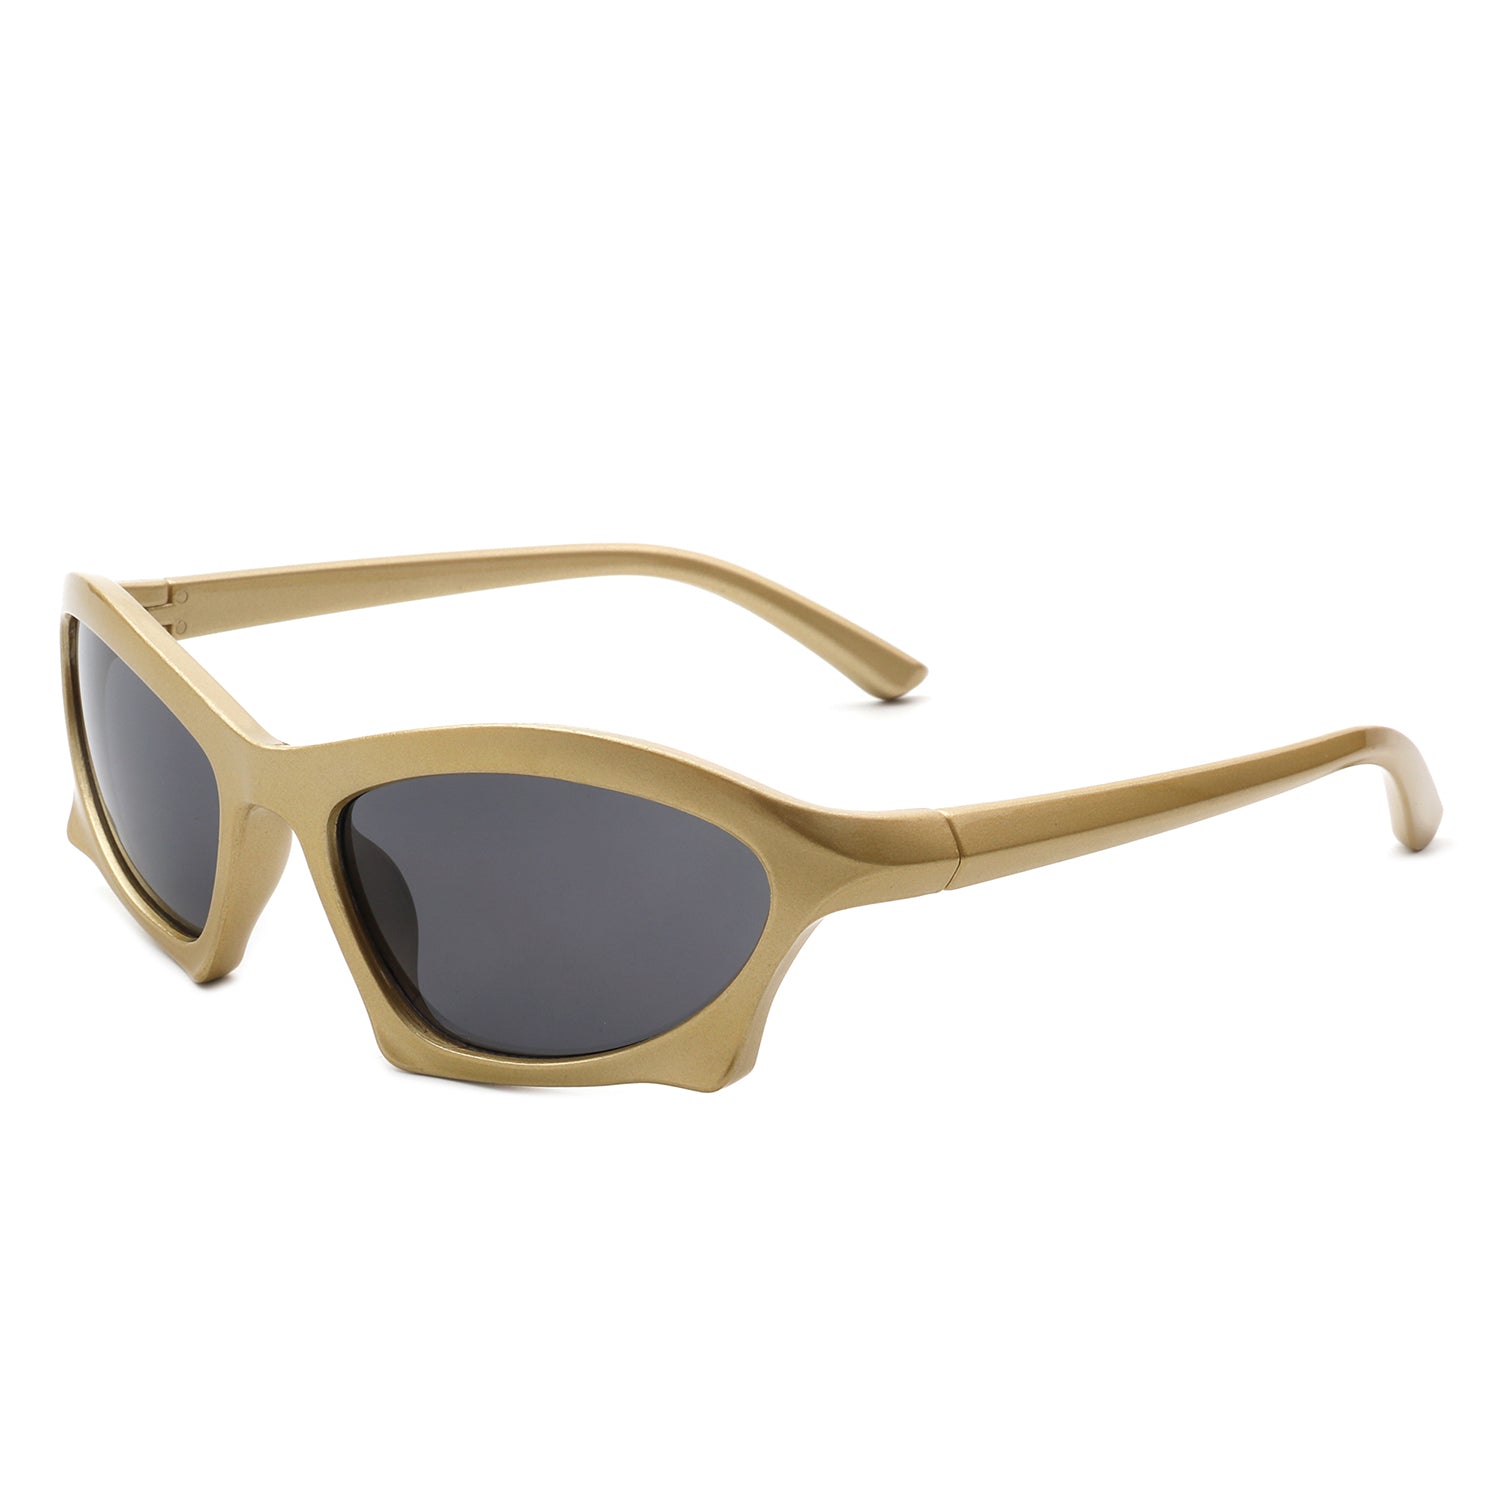 HS1153 - Rectangle Sport Shades Geometric Wrap Around Sunglasses